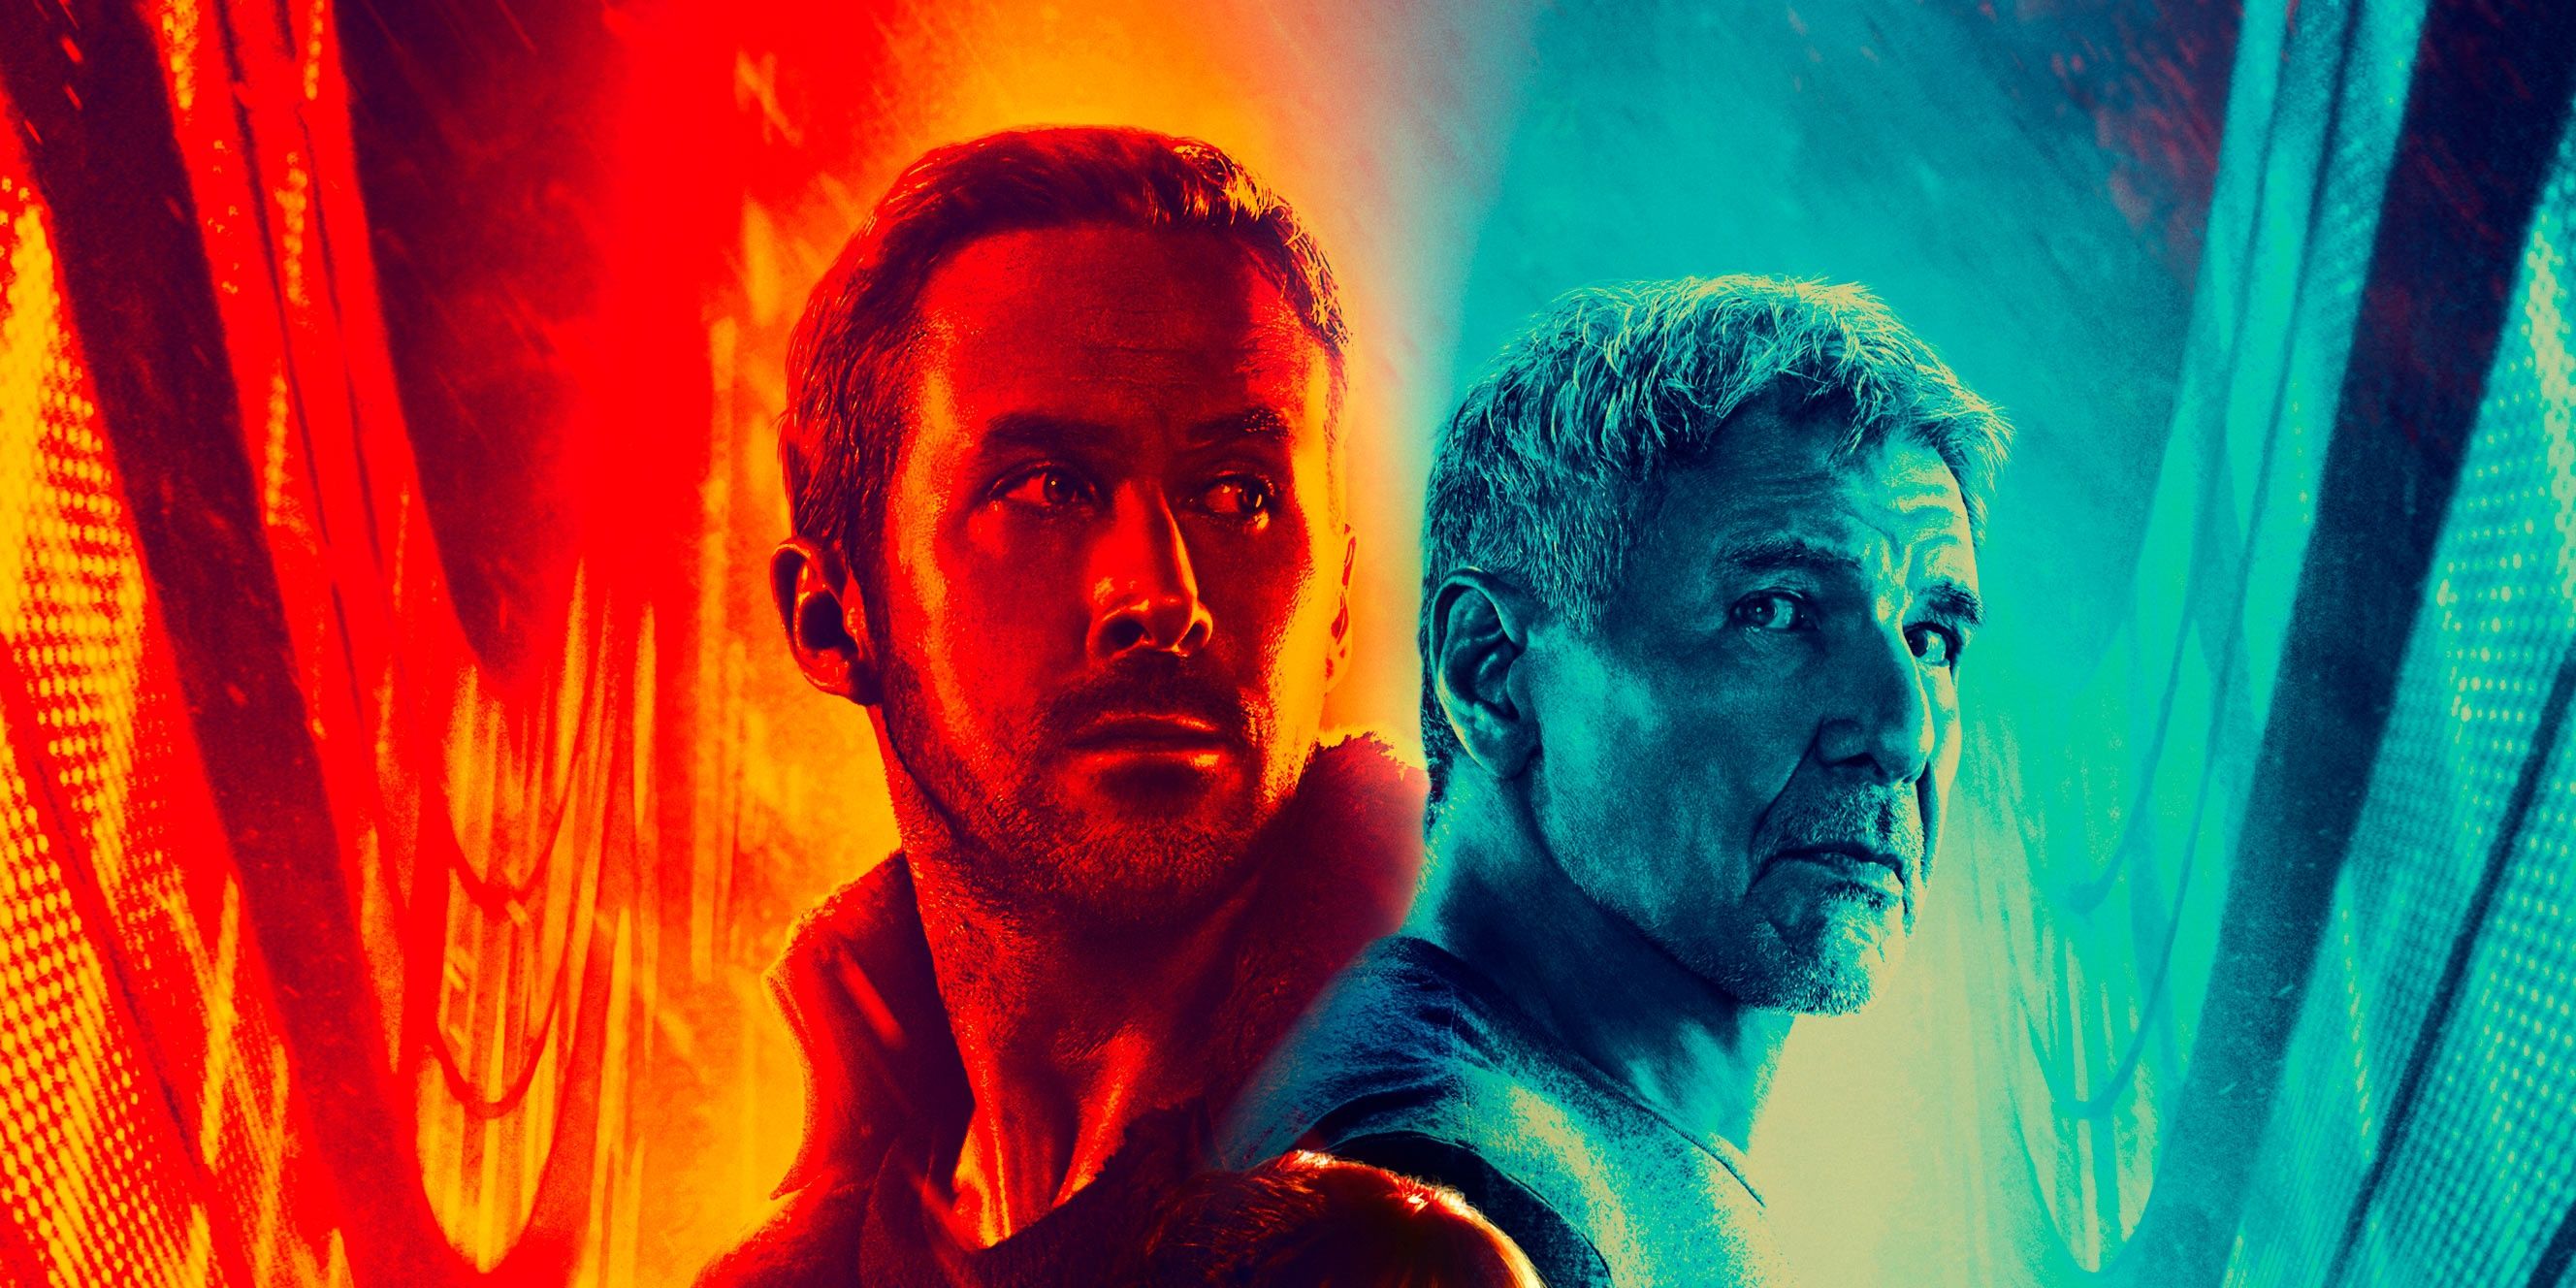 10 Hidden Details You Never Noticed In The Blade Runner 2049 Poster